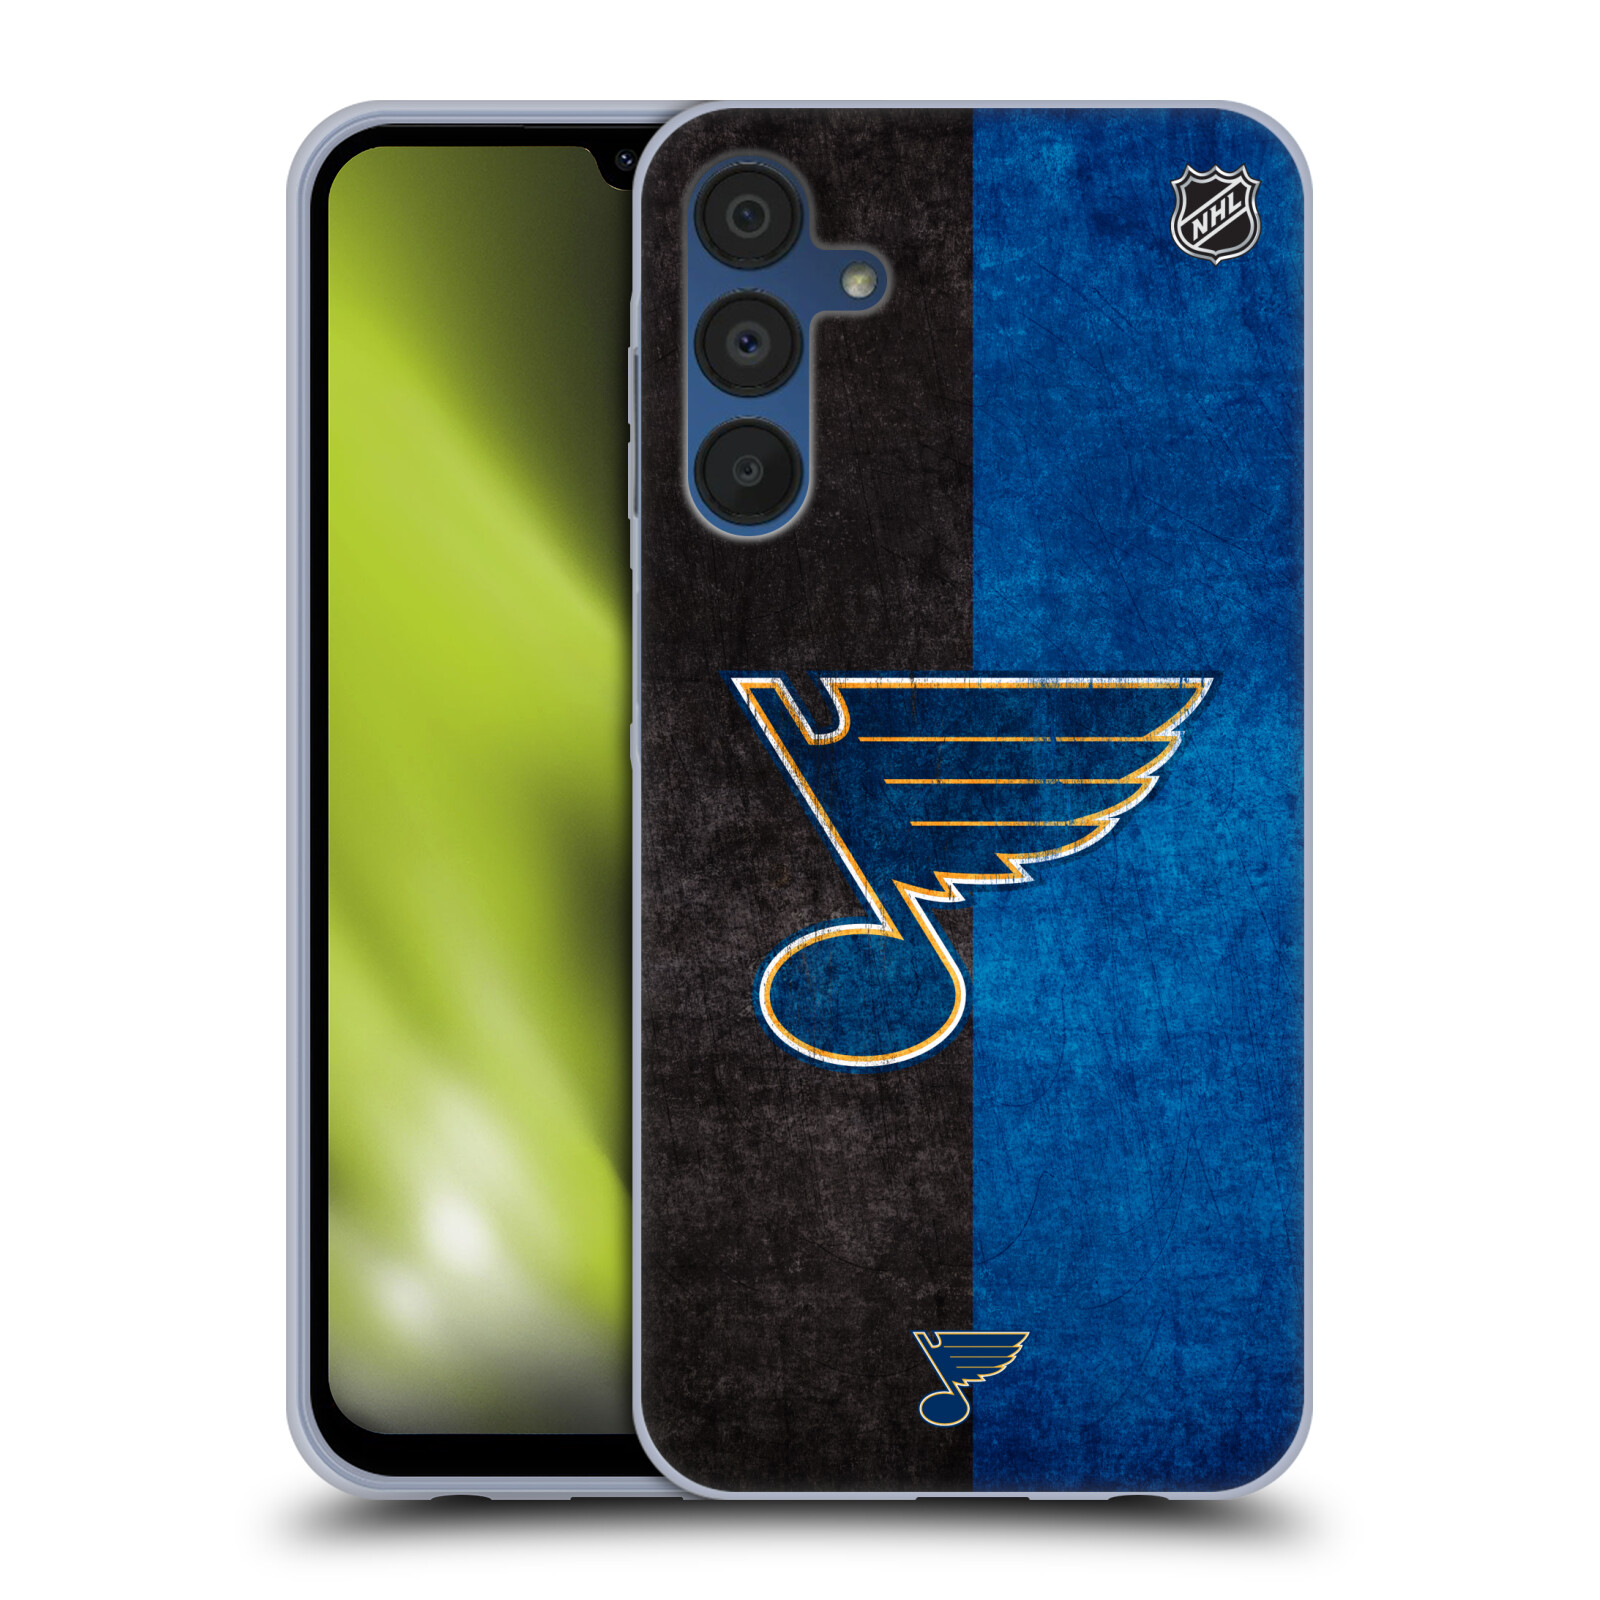 Silikonové pouzdro na mobil Samsung Galaxy A15 / A15 5G - NHL - Půlené logo St Louis Blues (Silikonový kryt, obal, pouzdro na mobilní telefon Samsung Galaxy A15 / A15 5G s licencovaným motivem NHL - Půlené logo St Louis Blues)